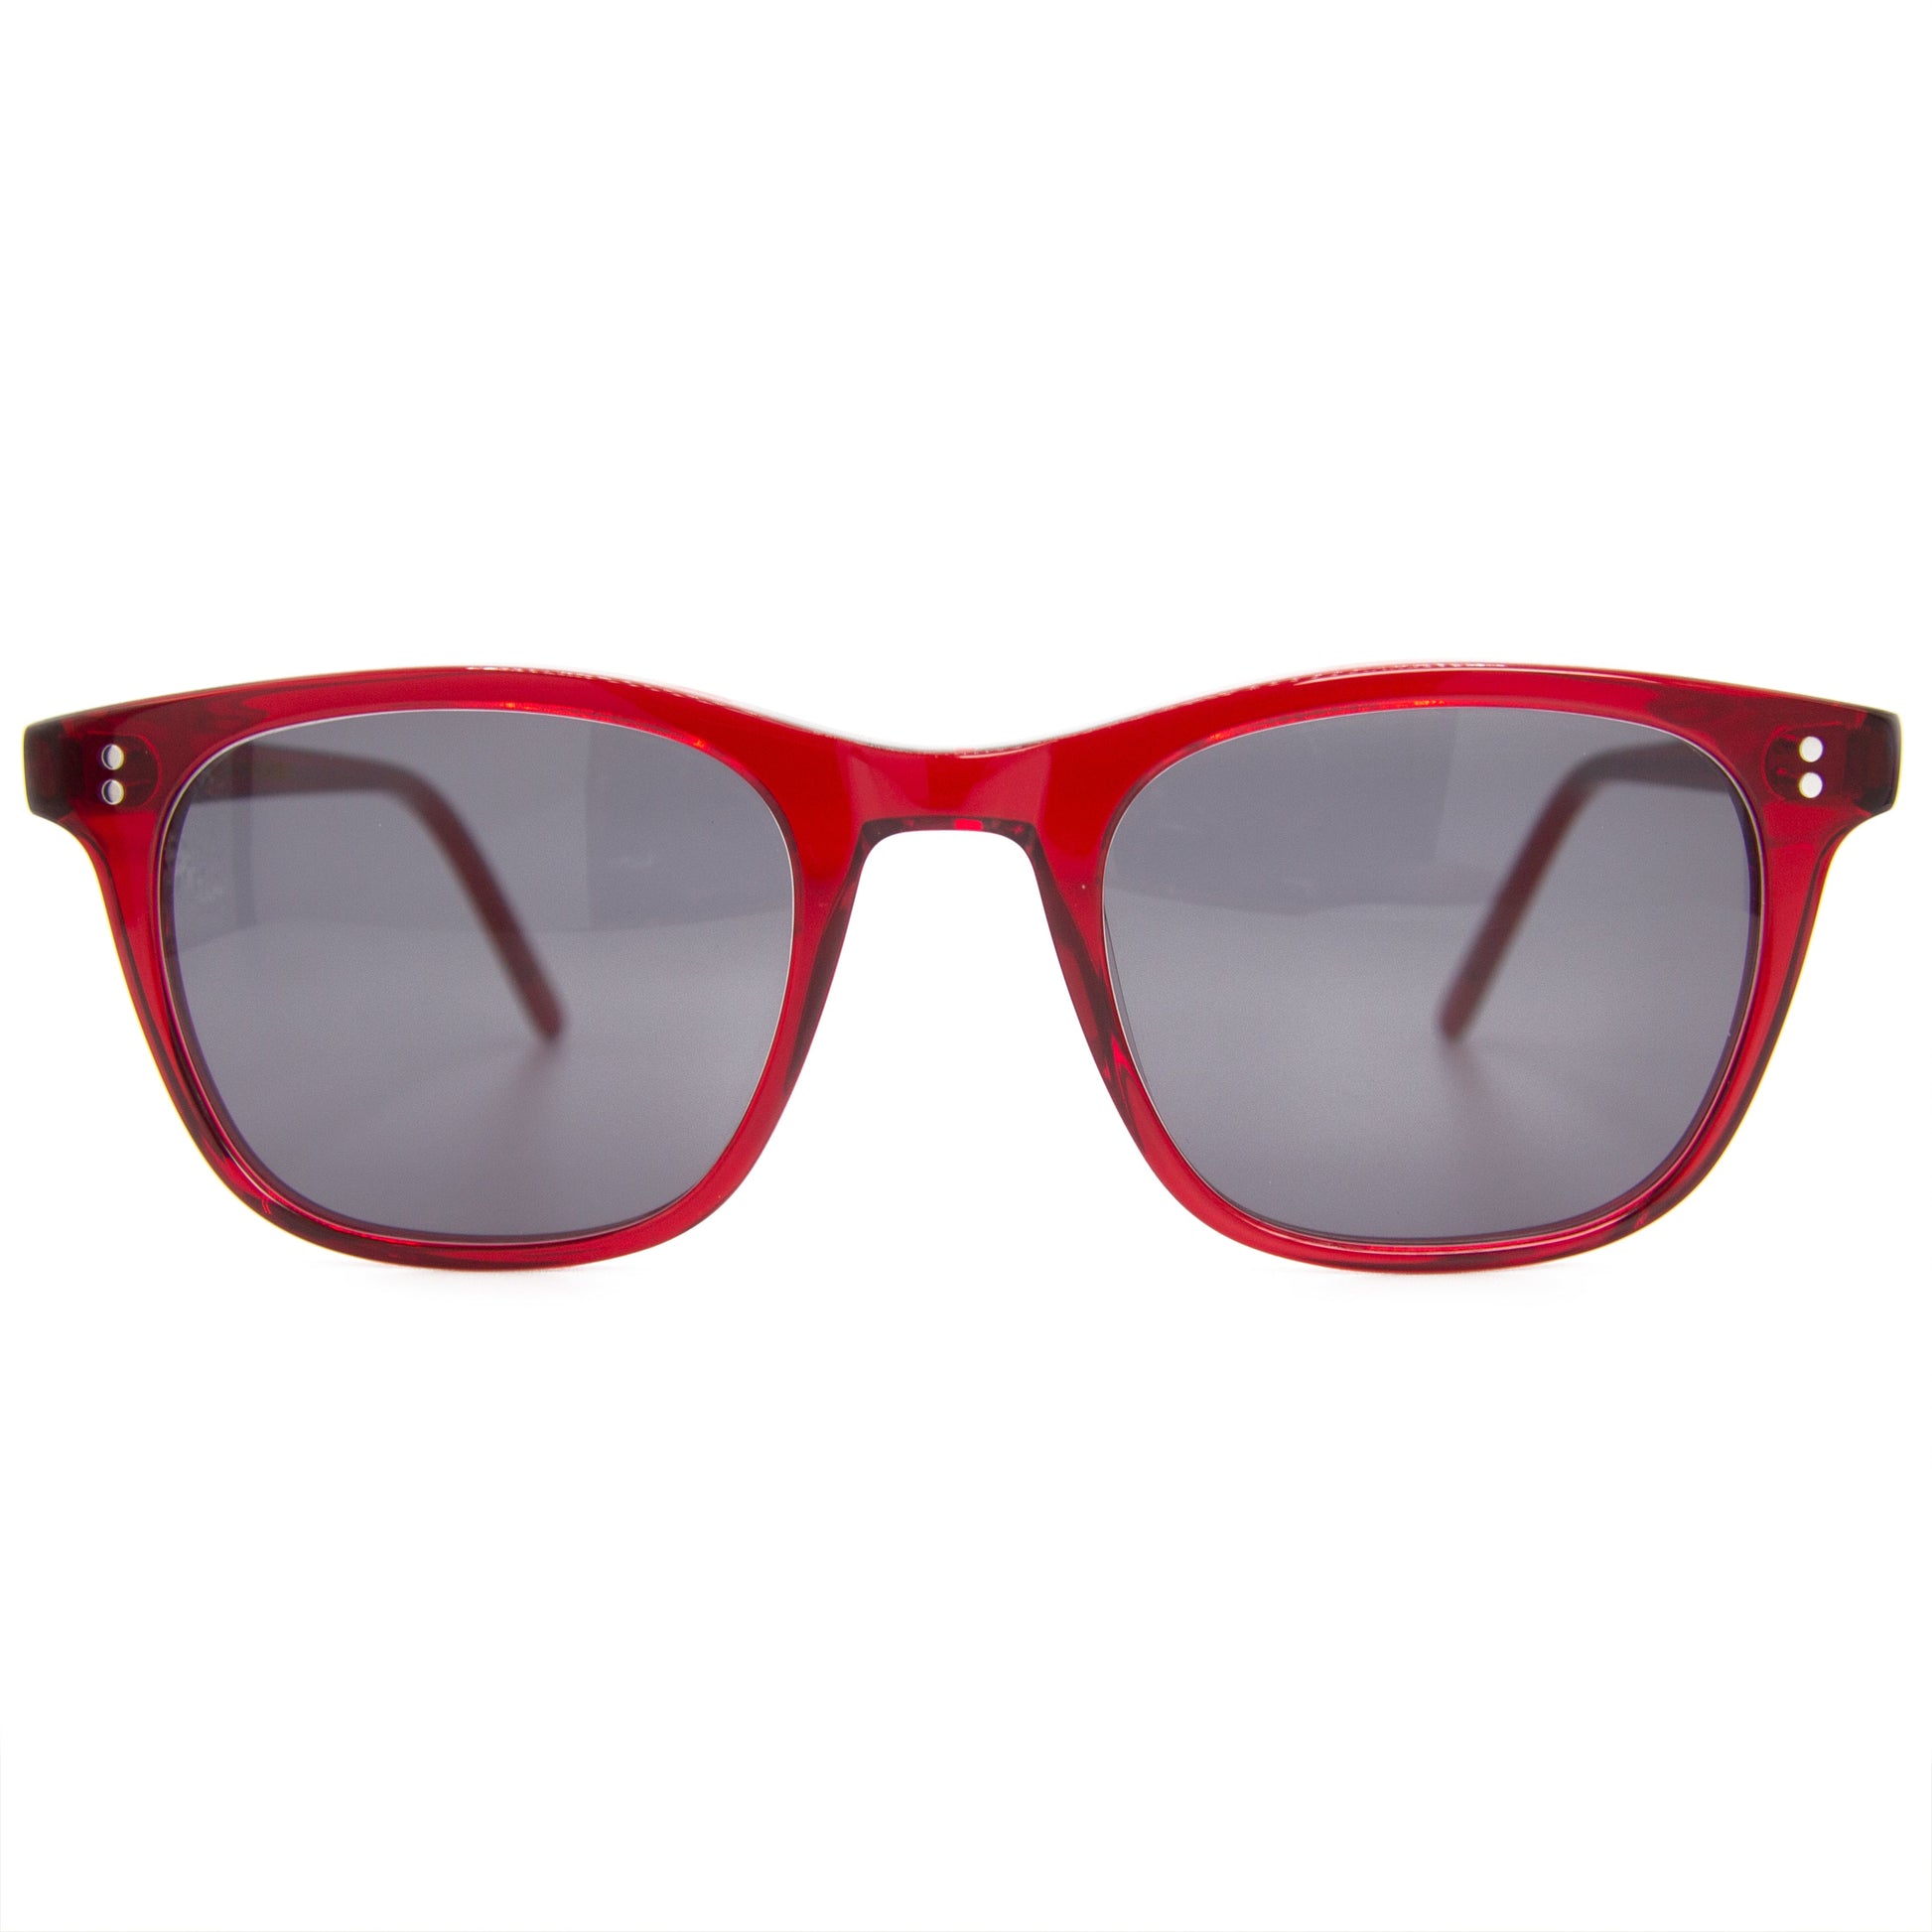 Soft Square Red Sunglasses